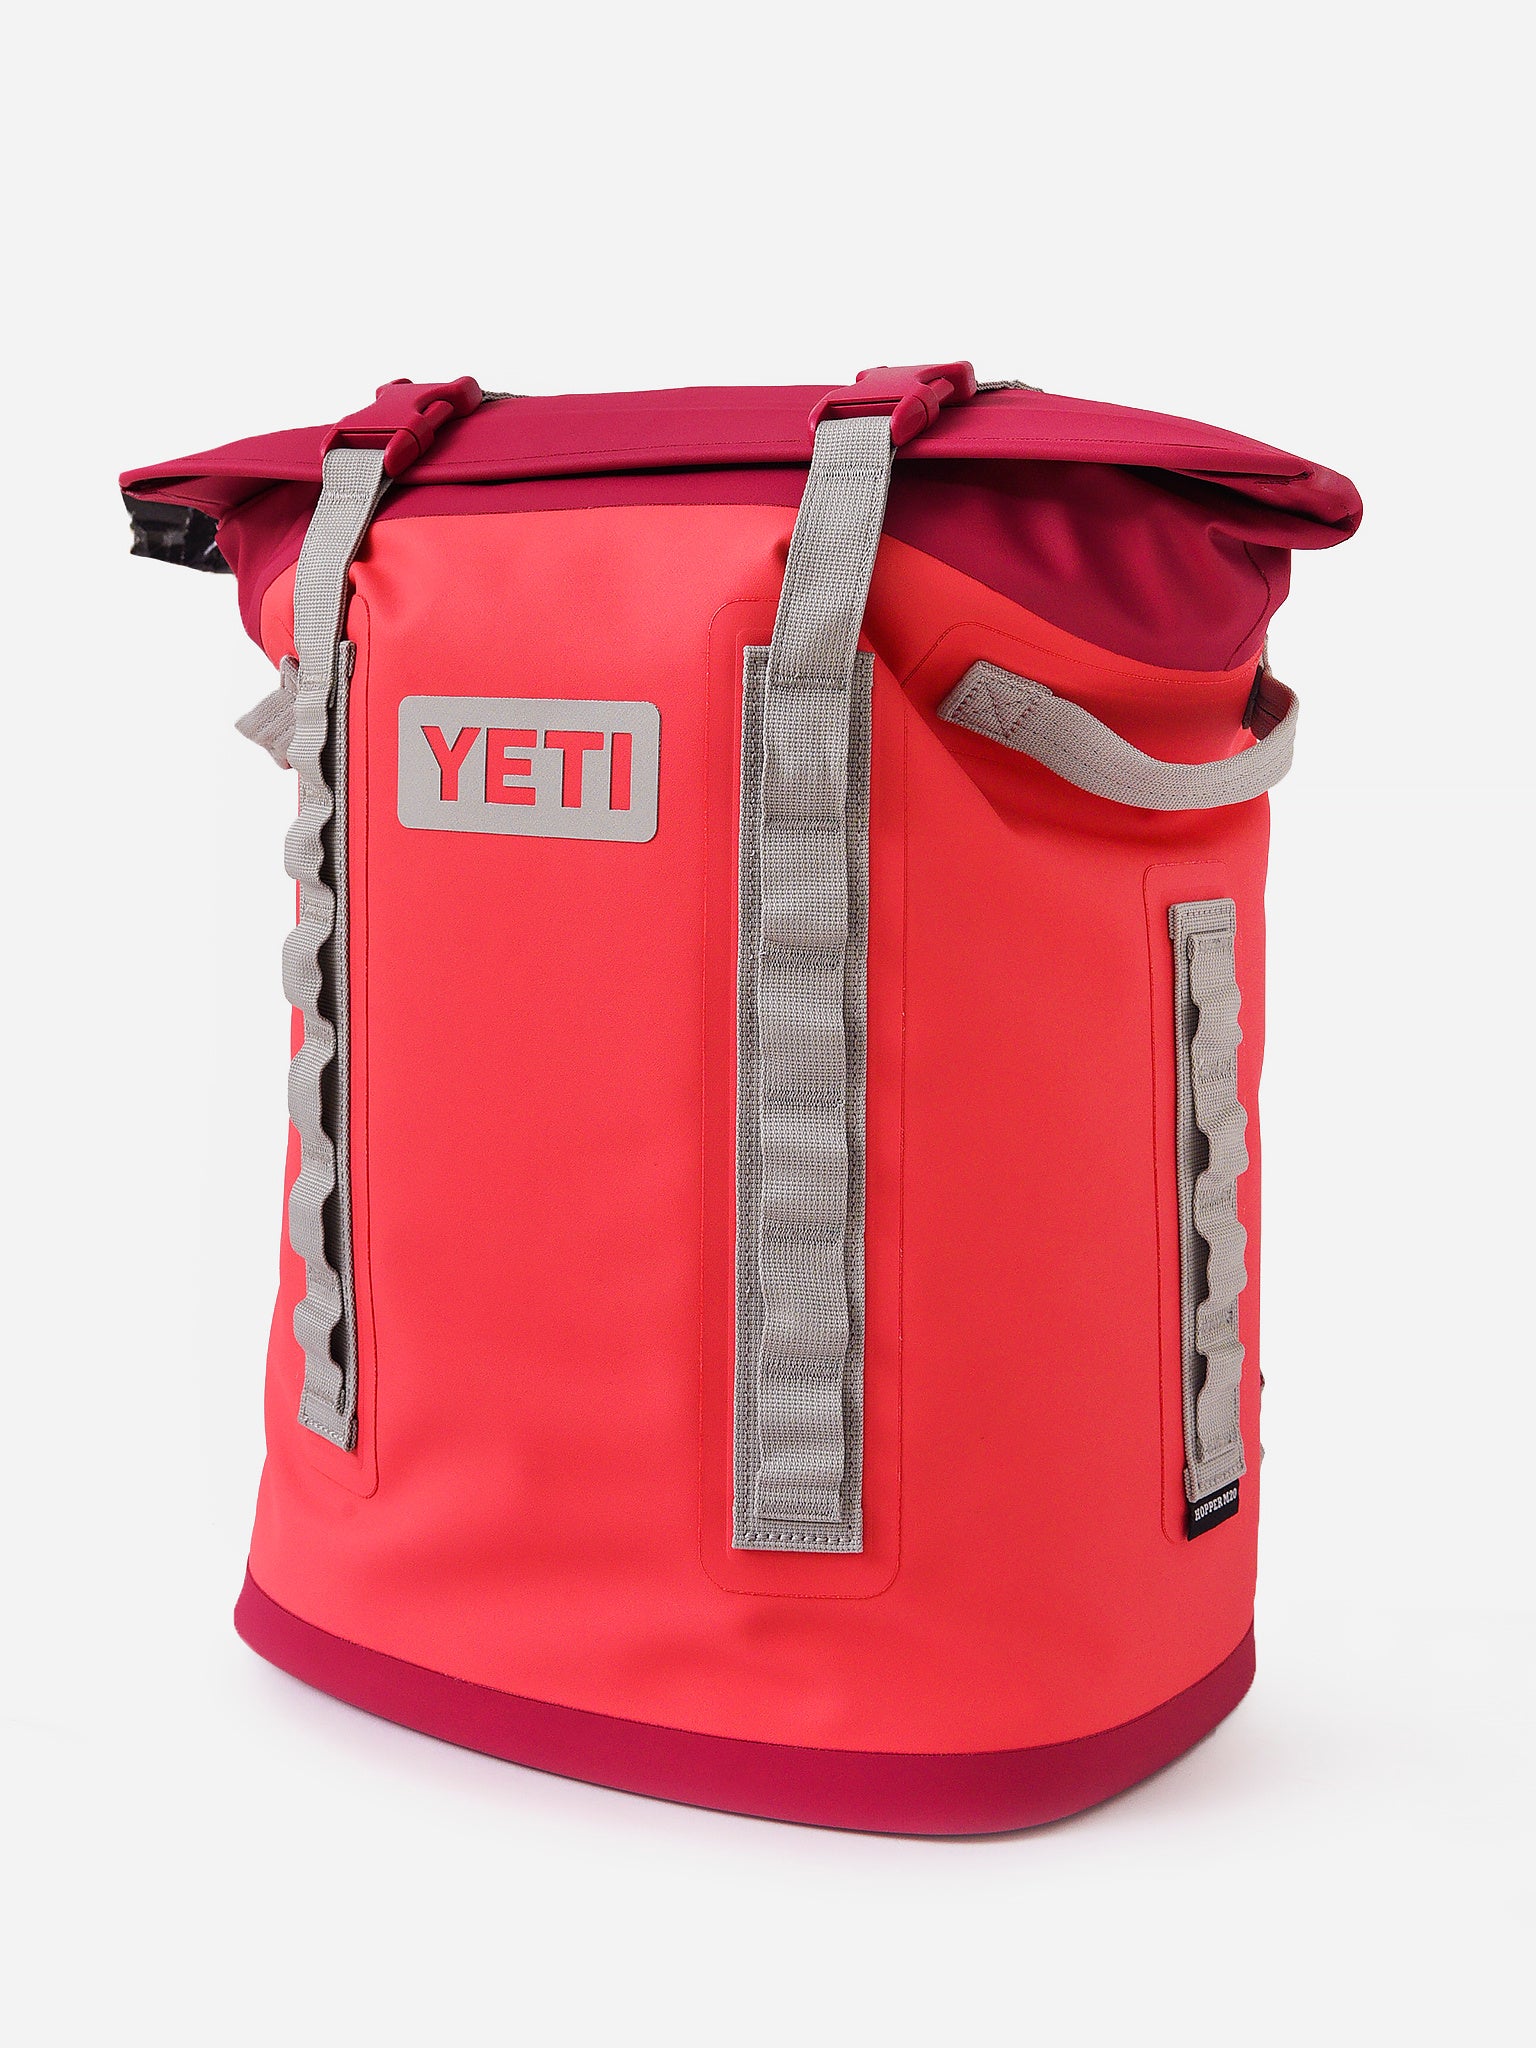 Shop for YETI M20 Soft Backpack Cooler